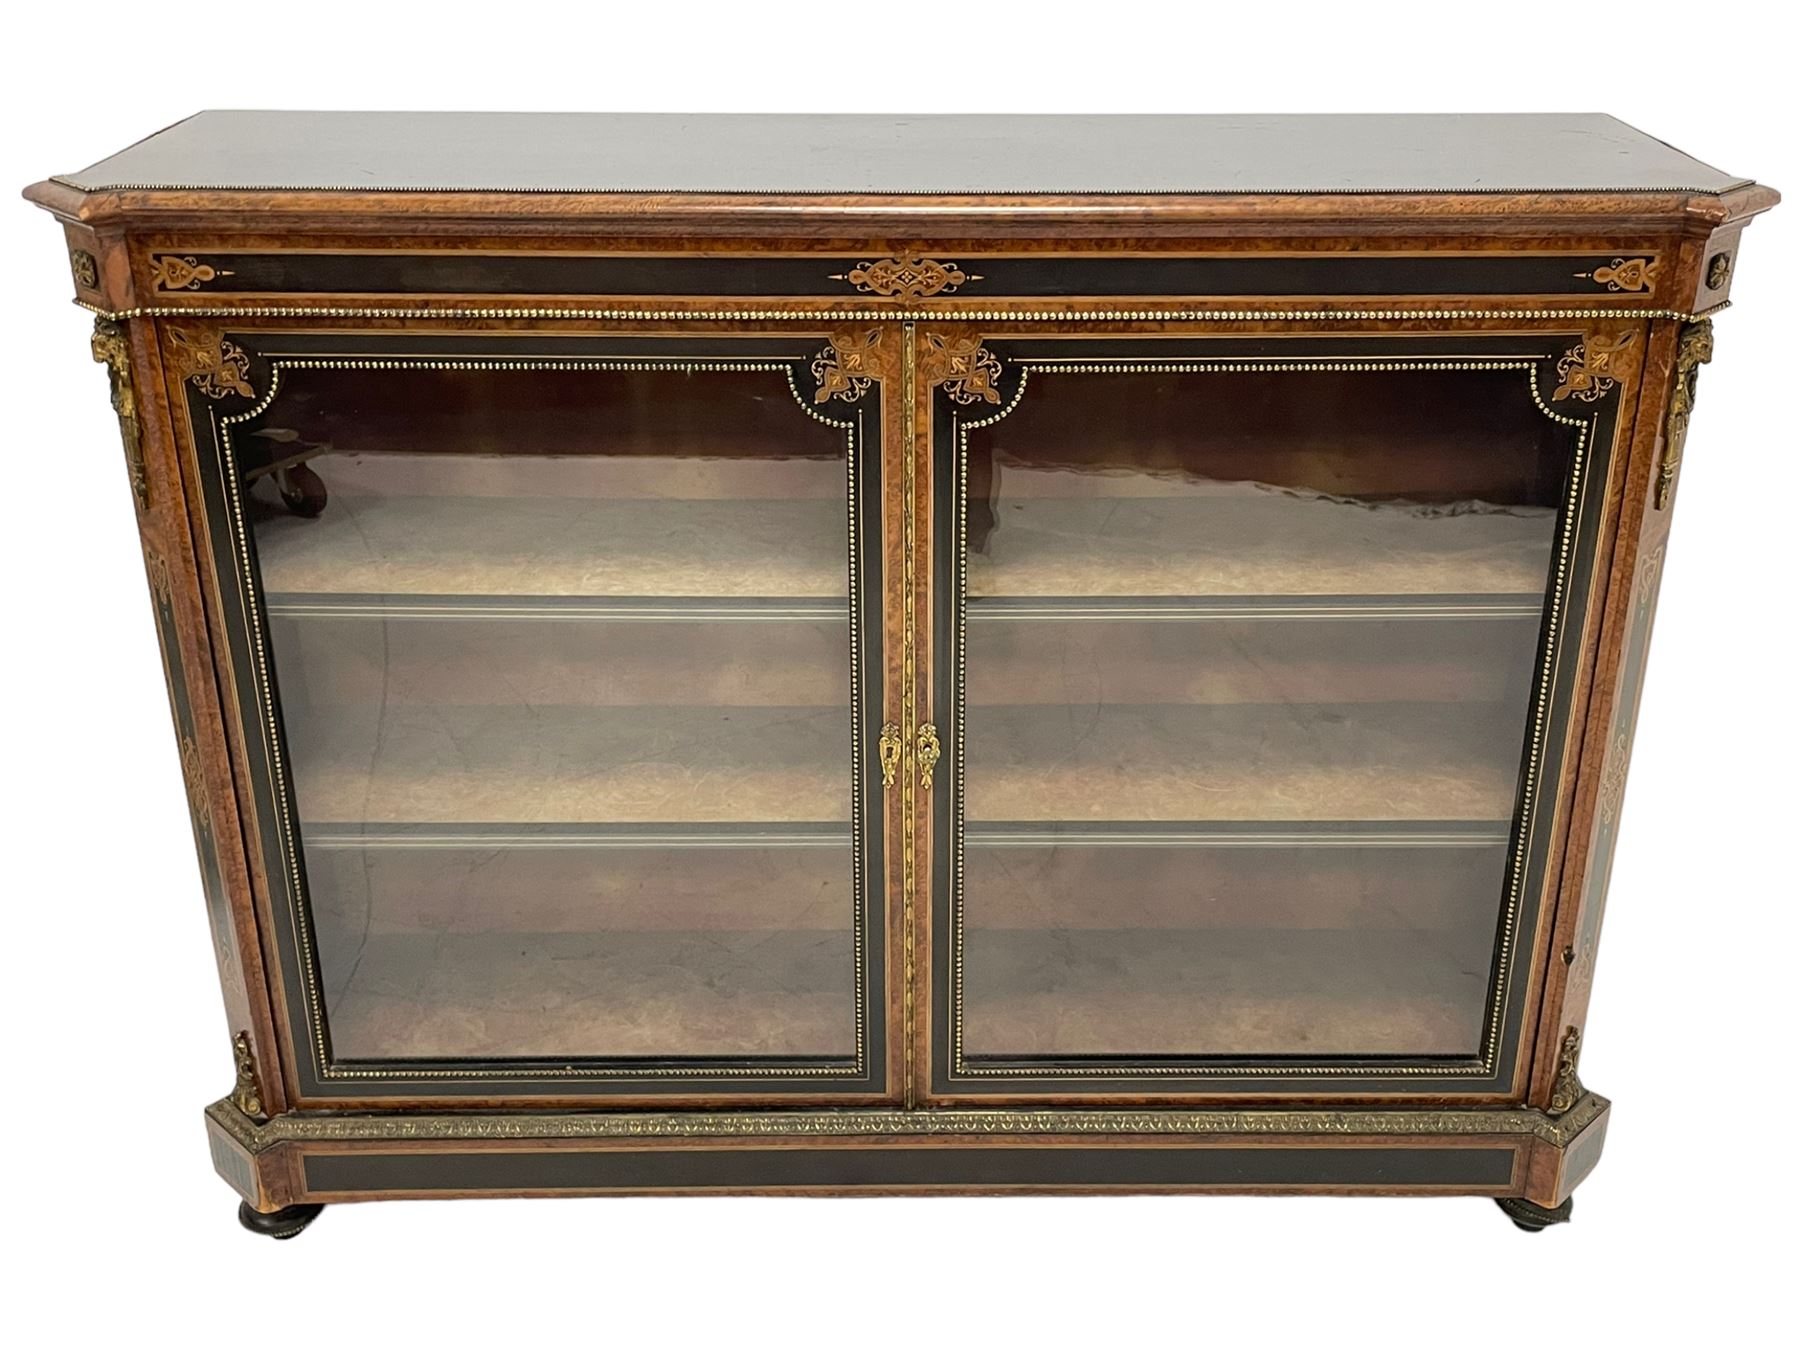 Victorian ebonised and amboyna wood credenza pier cabinet - Image 20 of 26